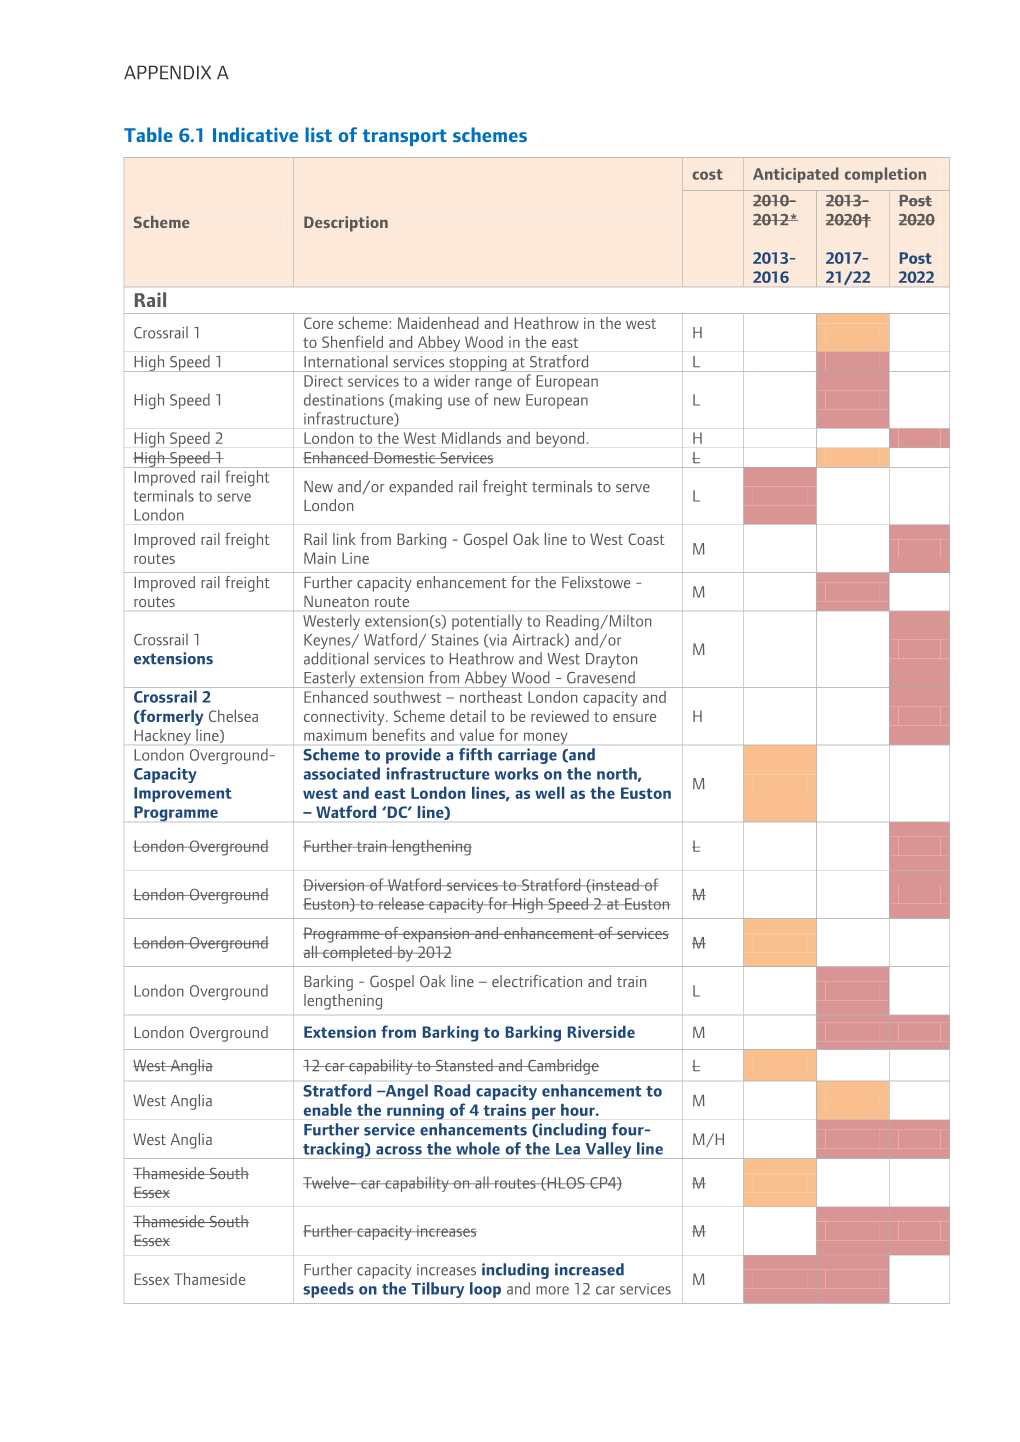 APPENDIX a Table 6.1 Indicative List of Transport Schemes Rail